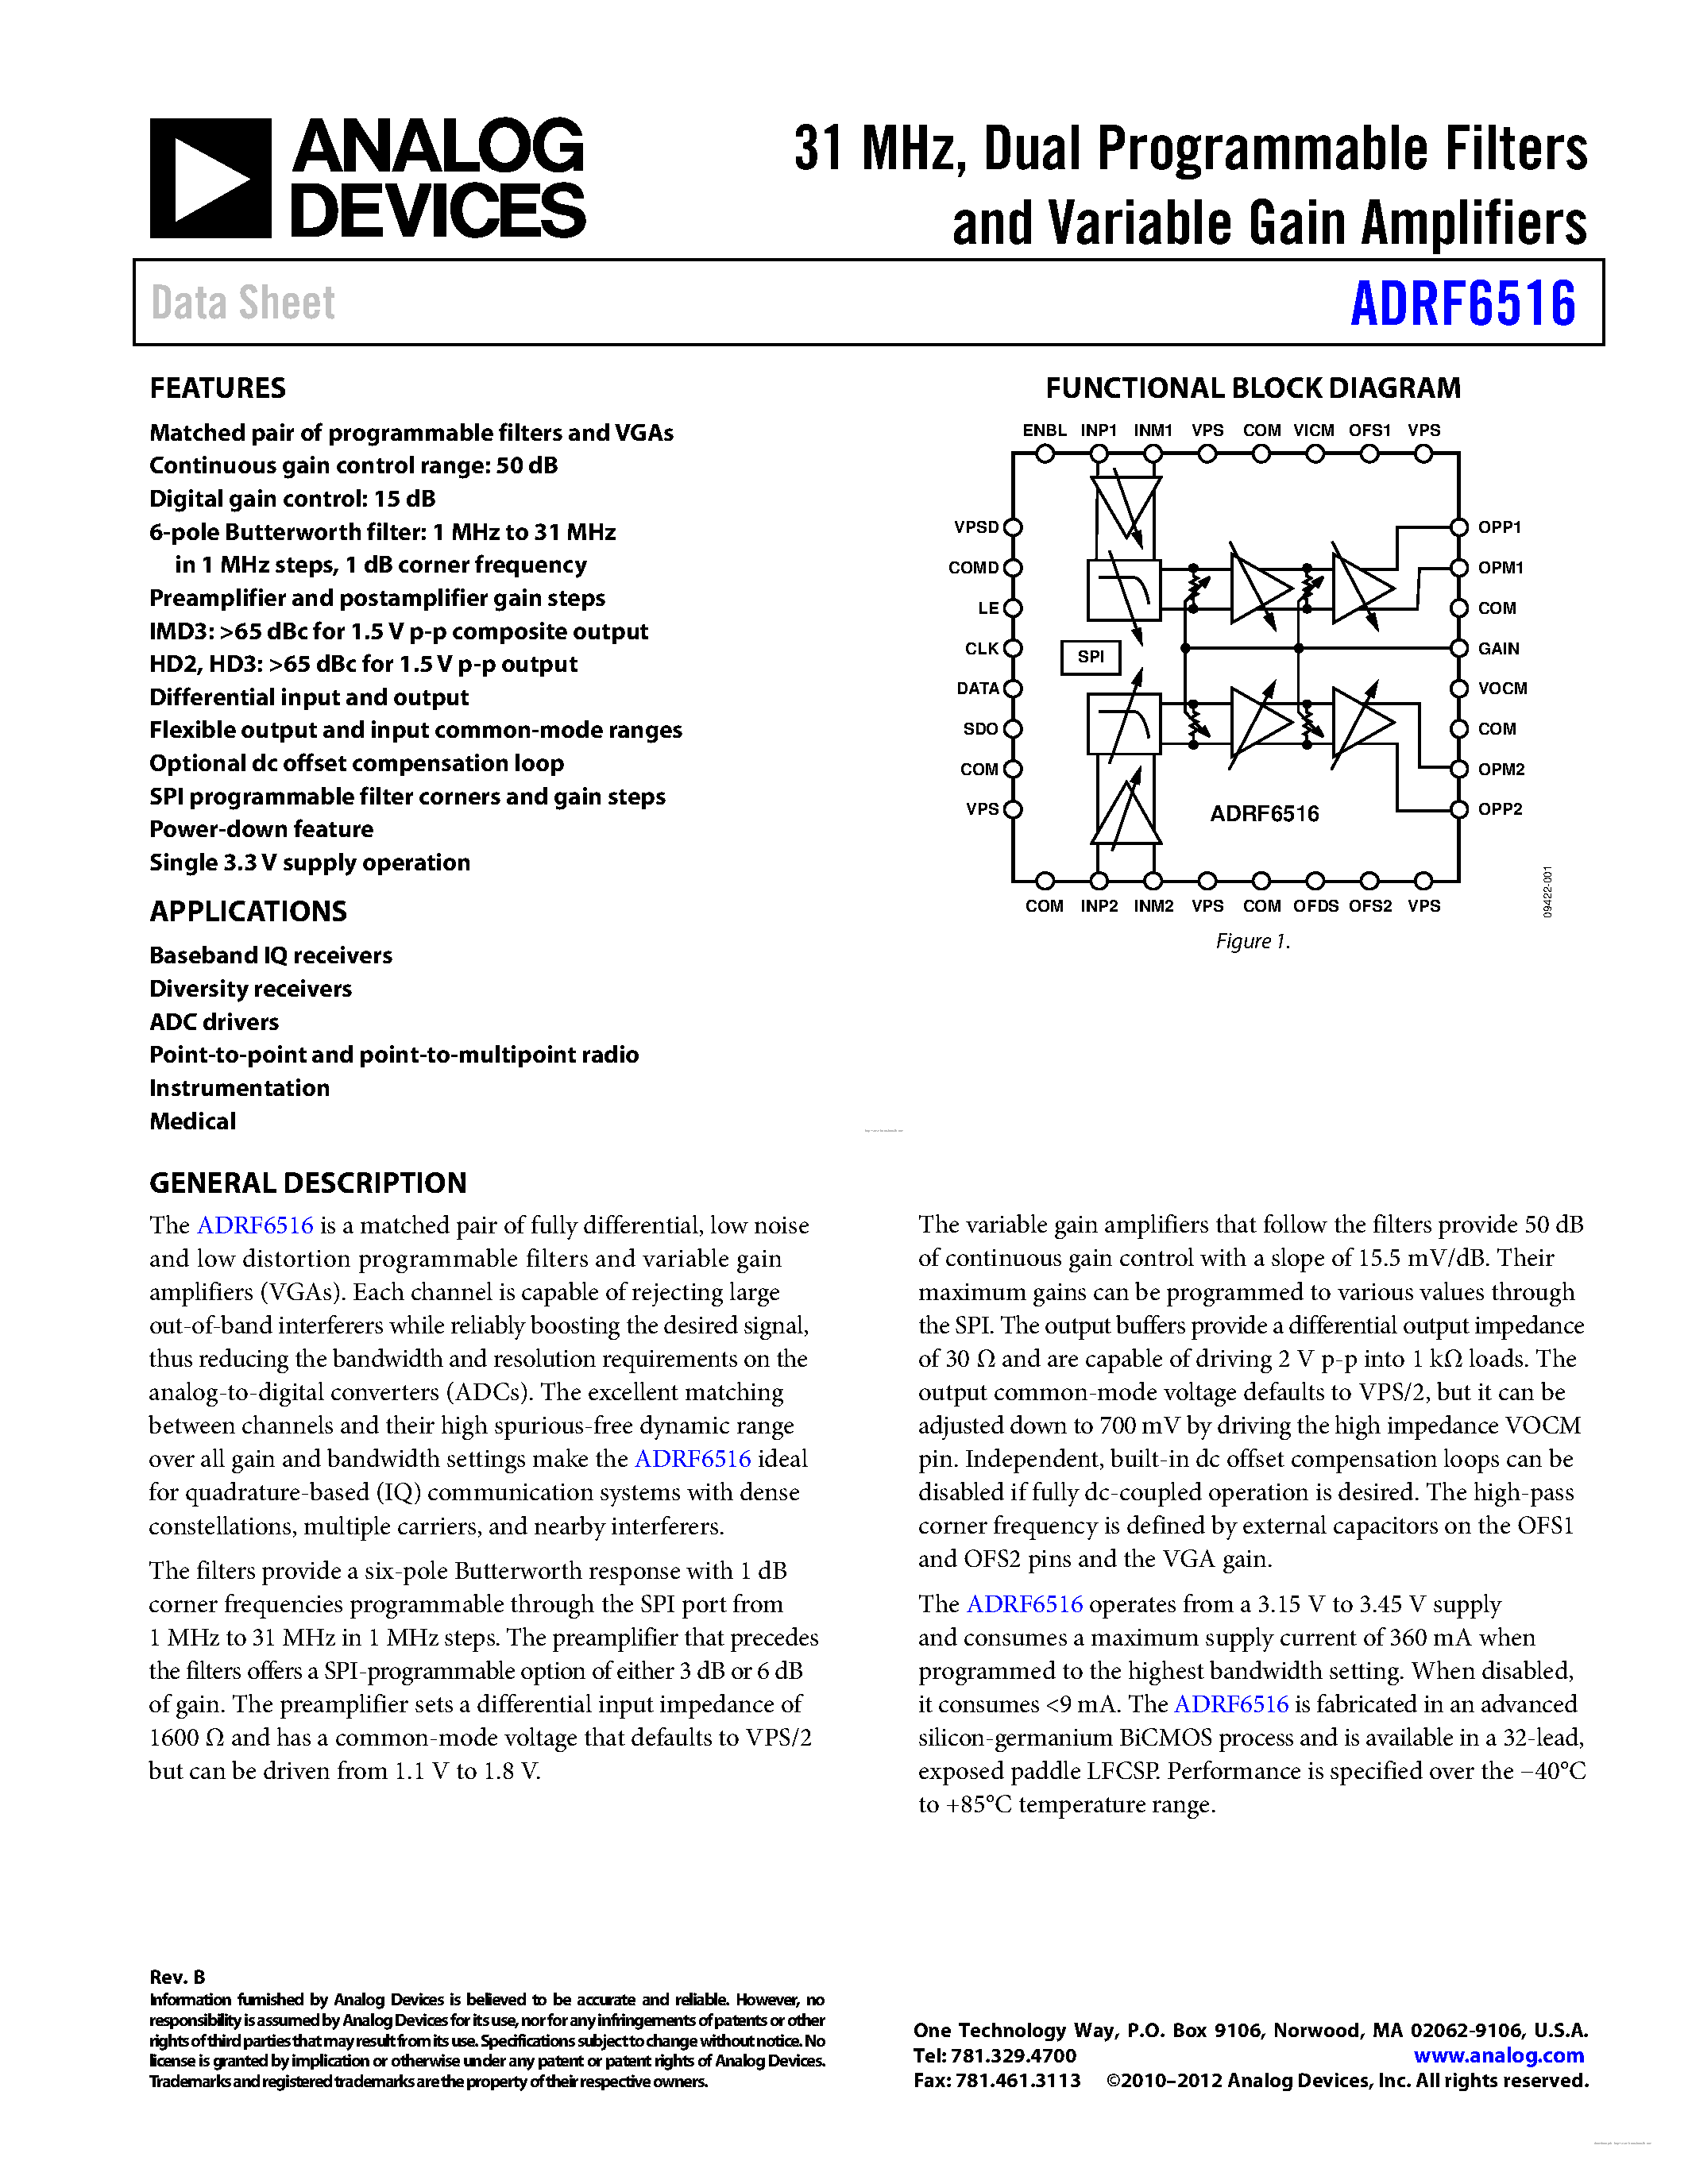 Datasheet ADRF6516 - page 1